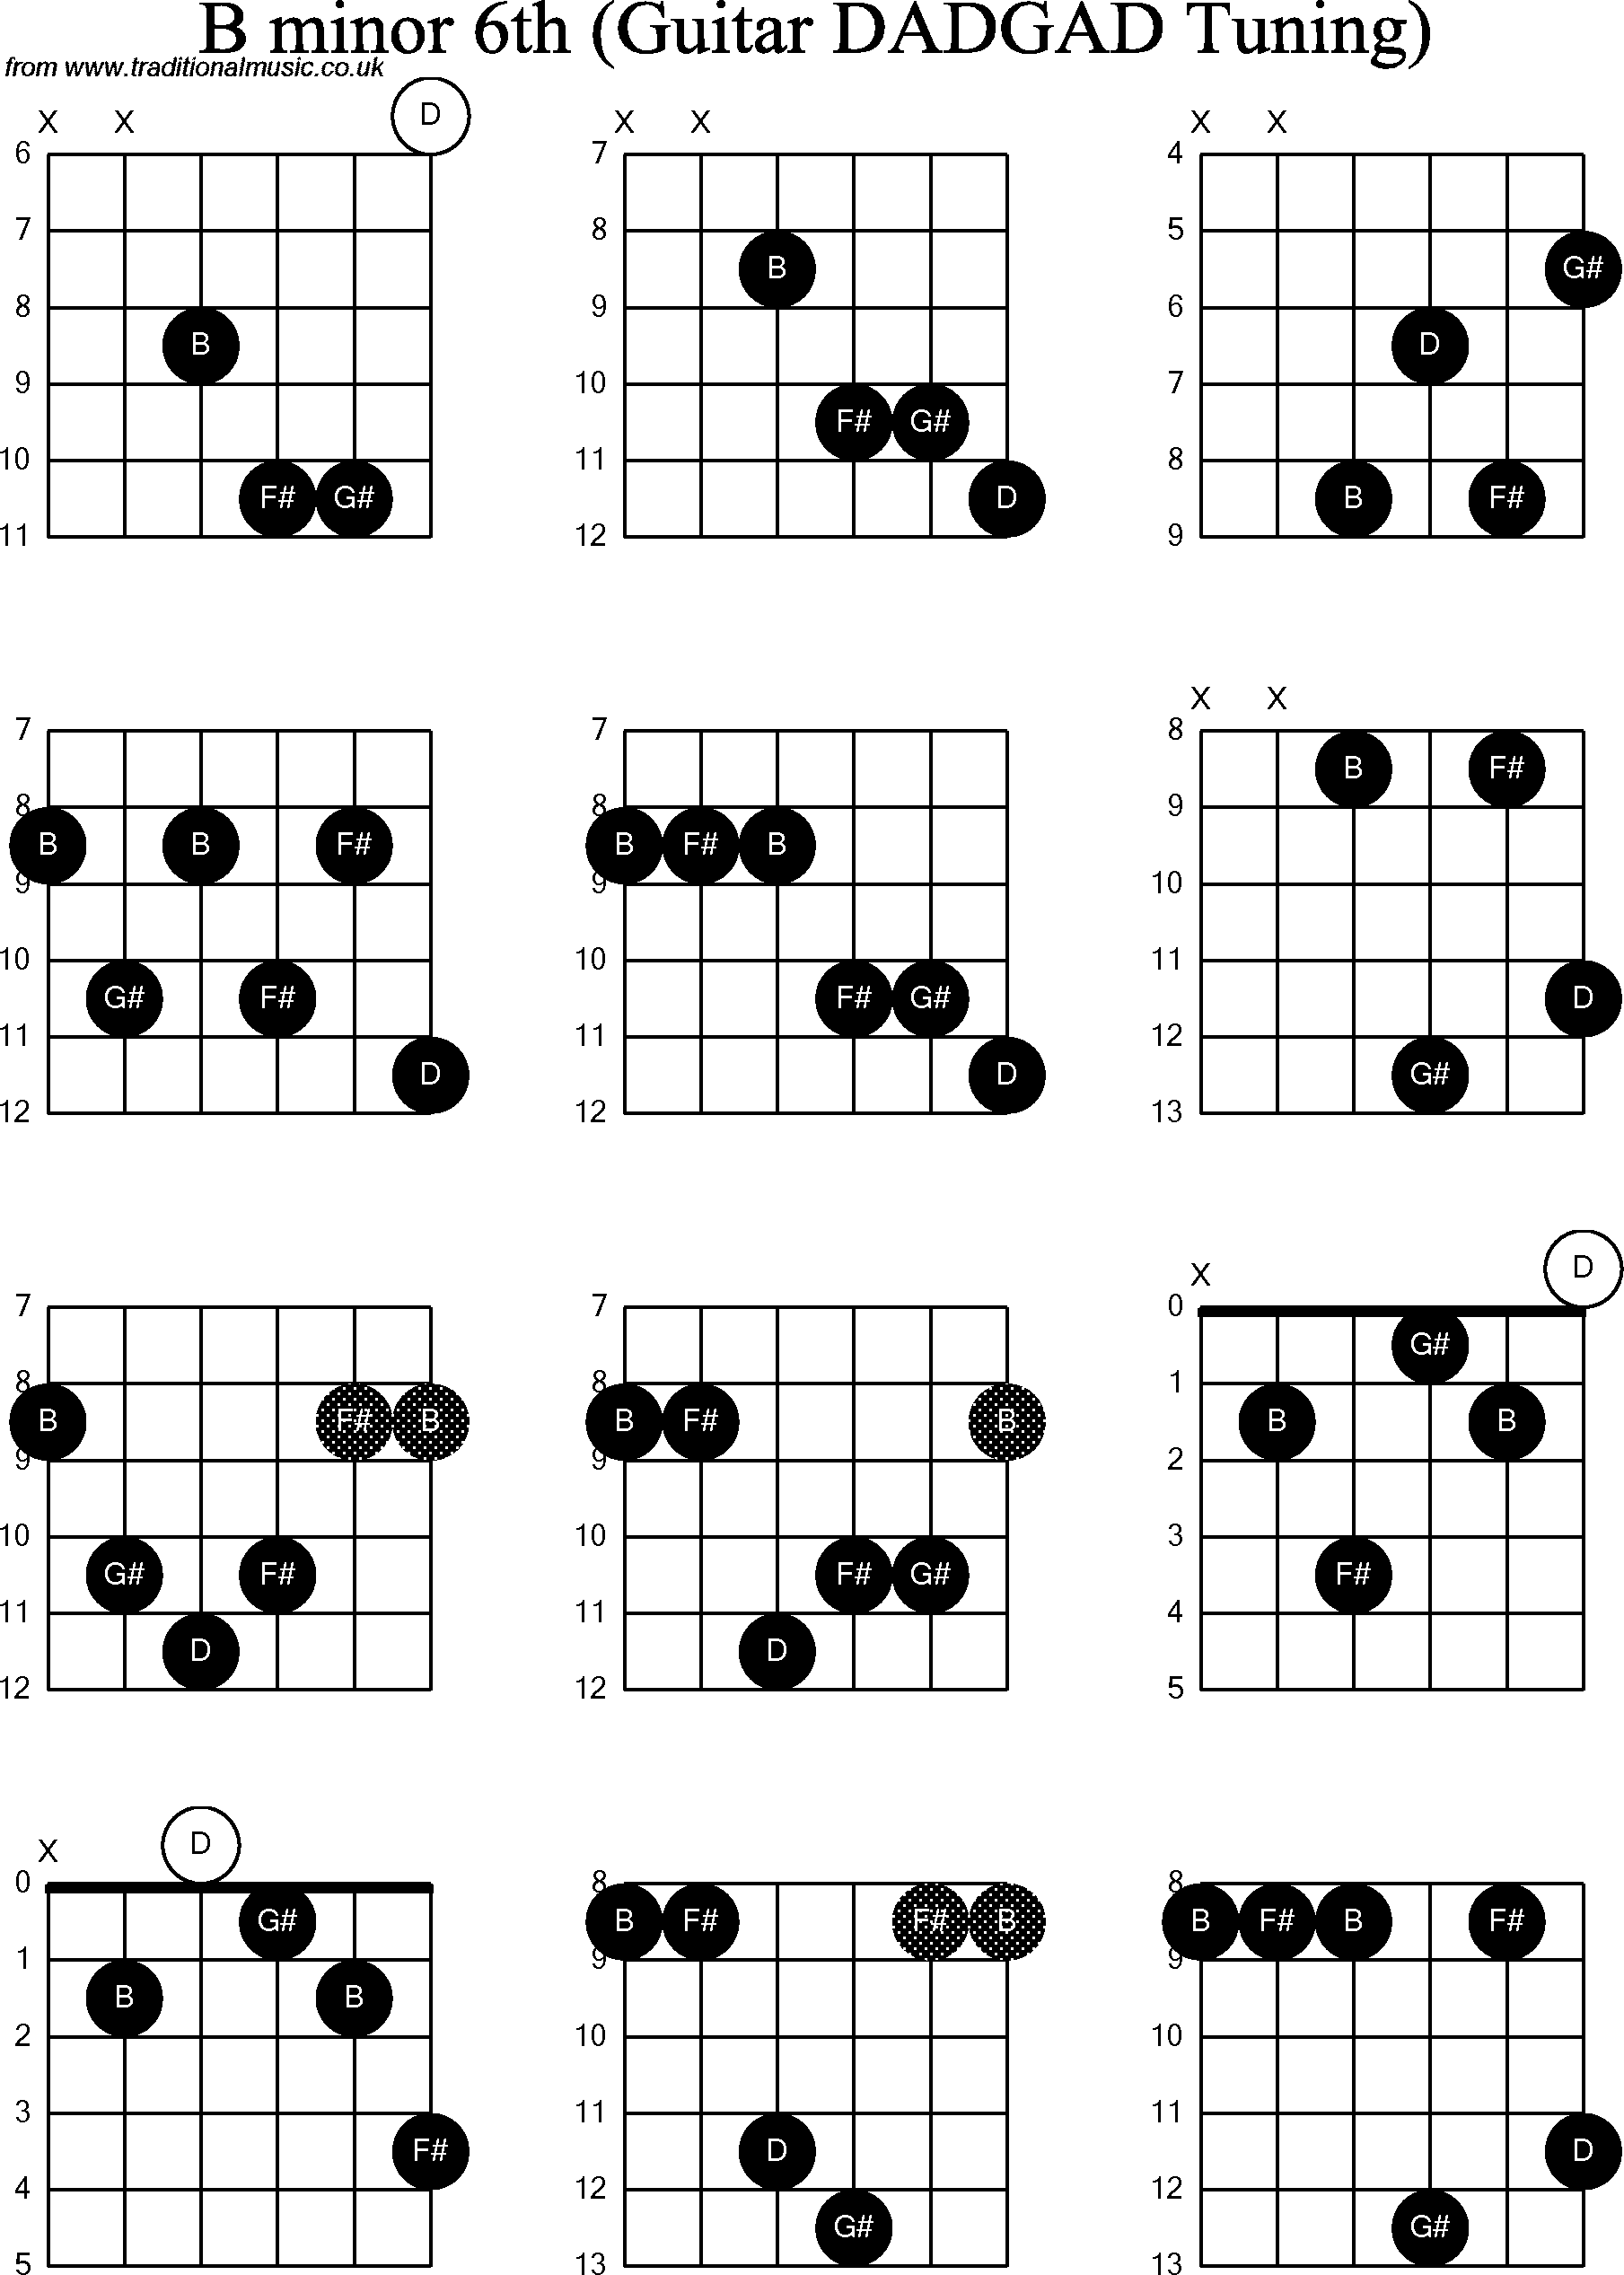 Chord Diagrams for D Modal Guitar(DADGAD), B Minor6th